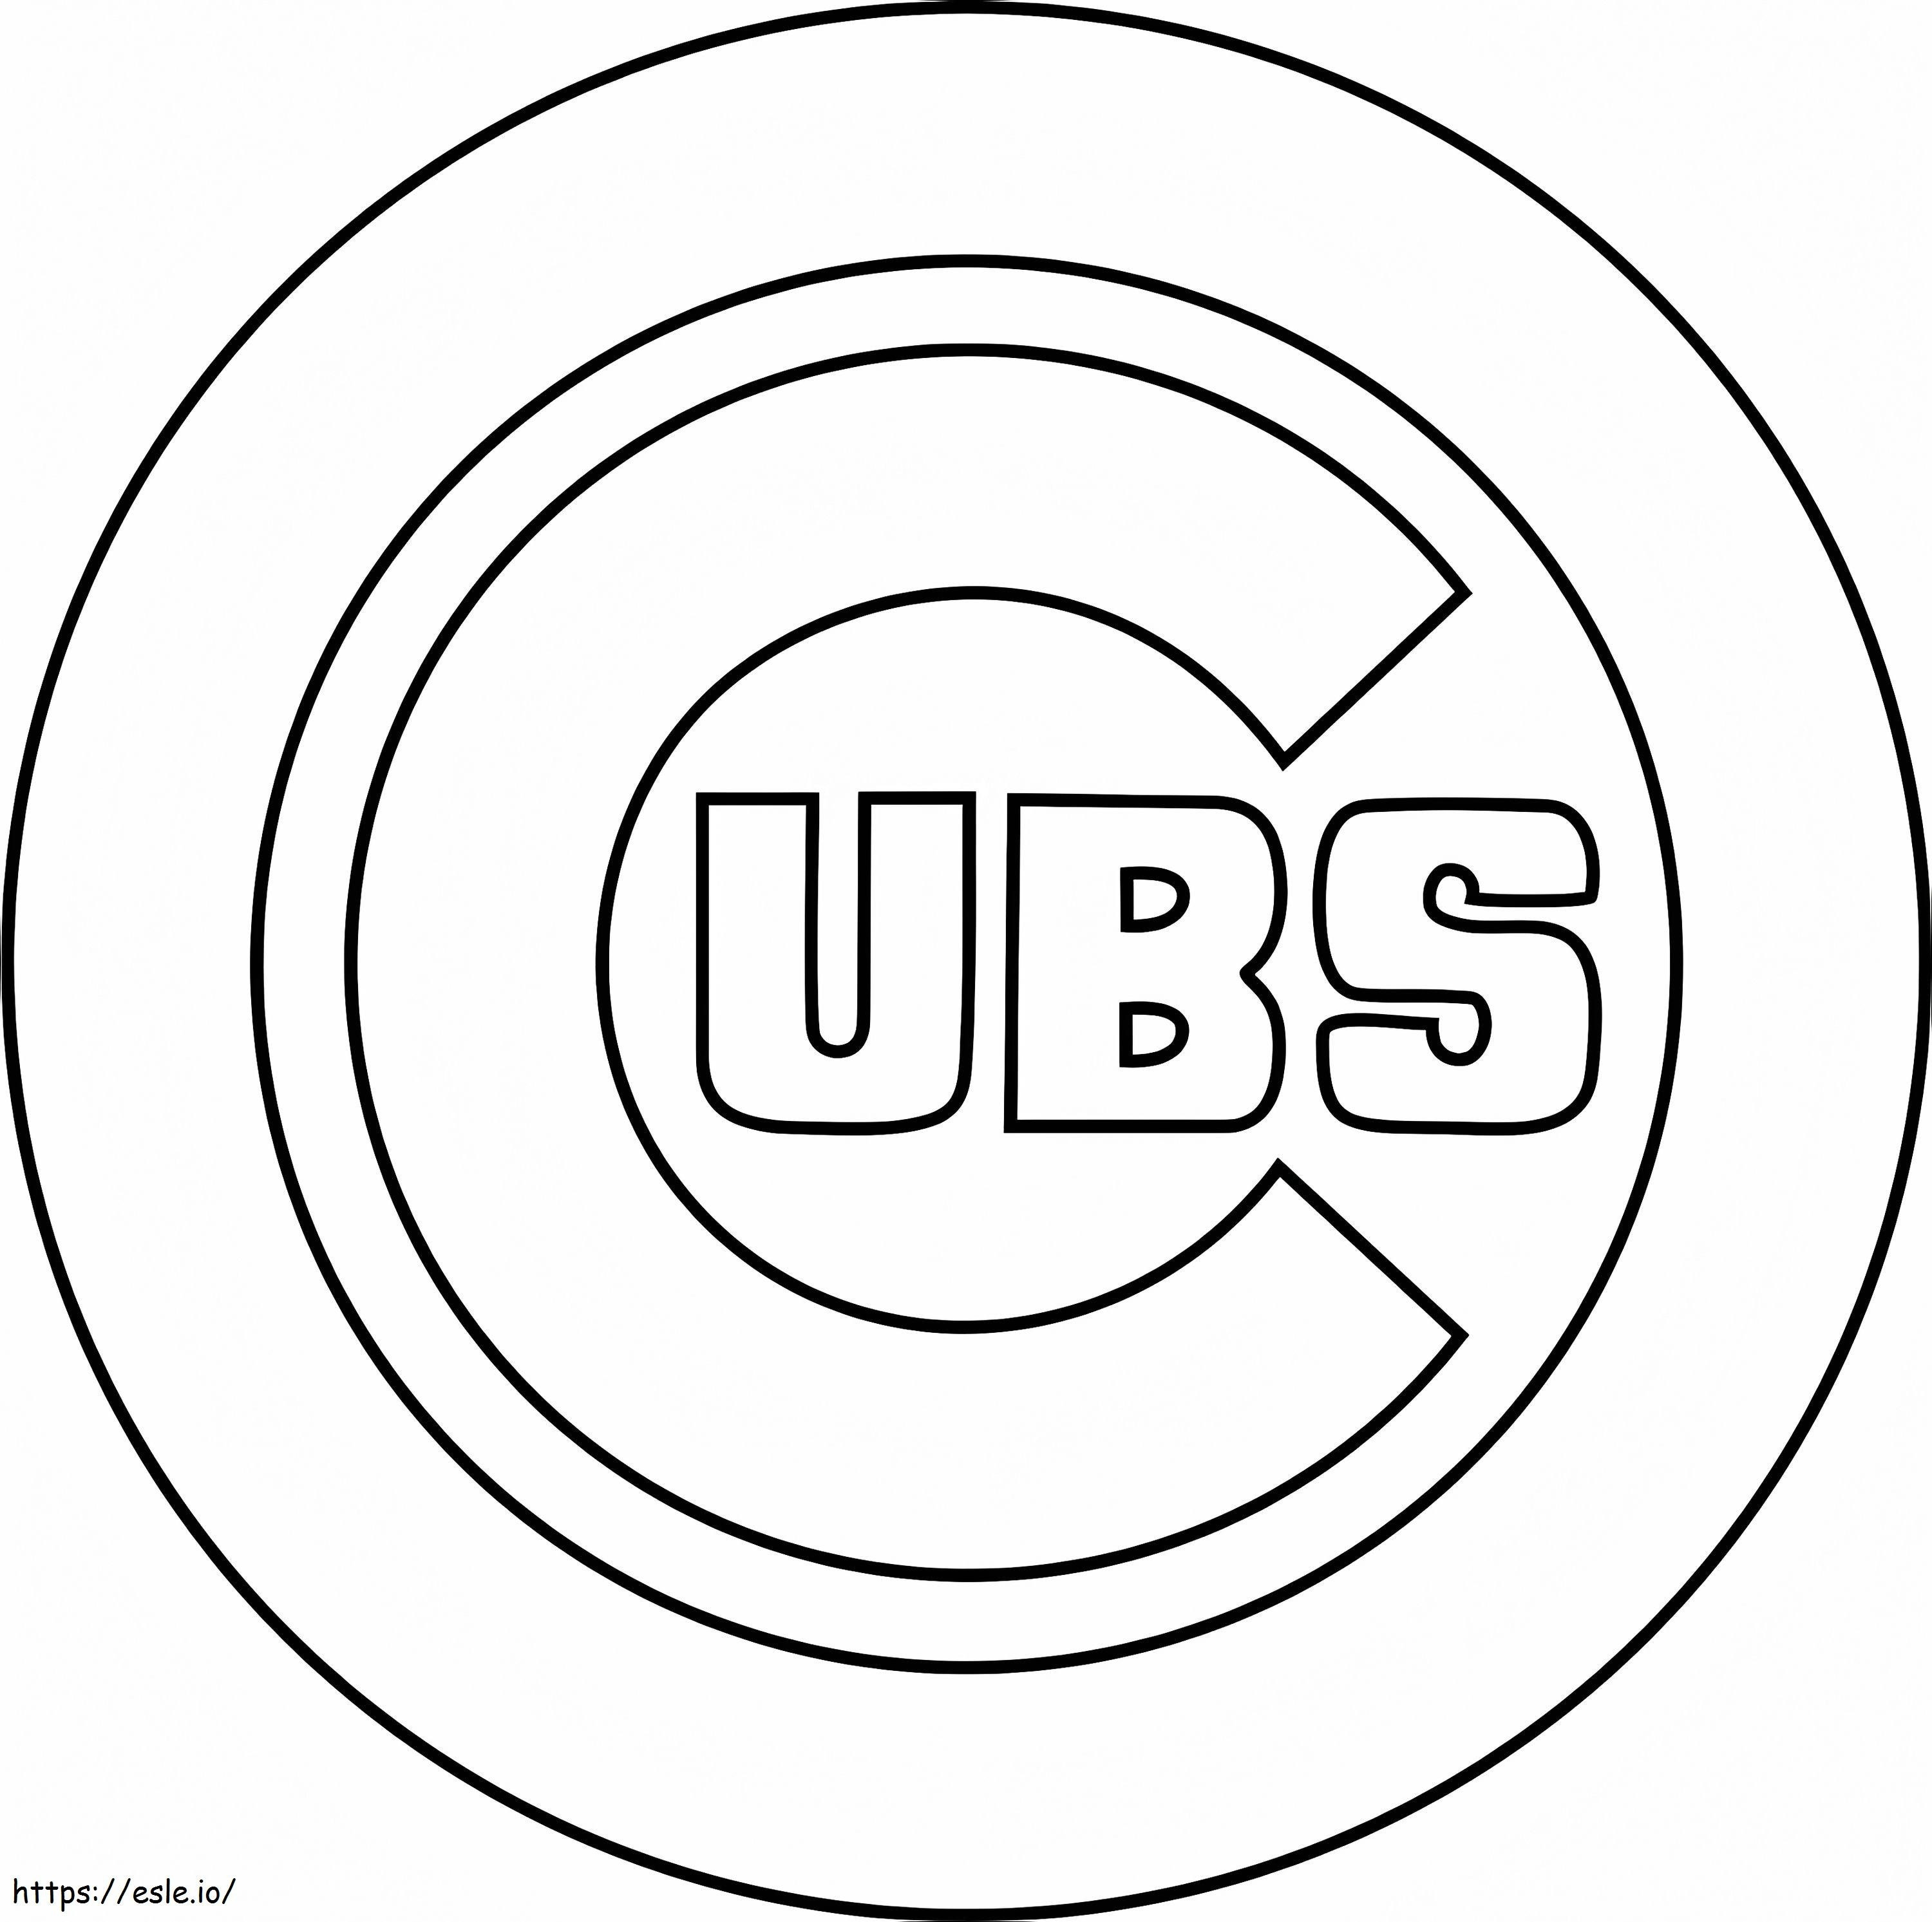 Logo Chicago Cubs kolorowanka